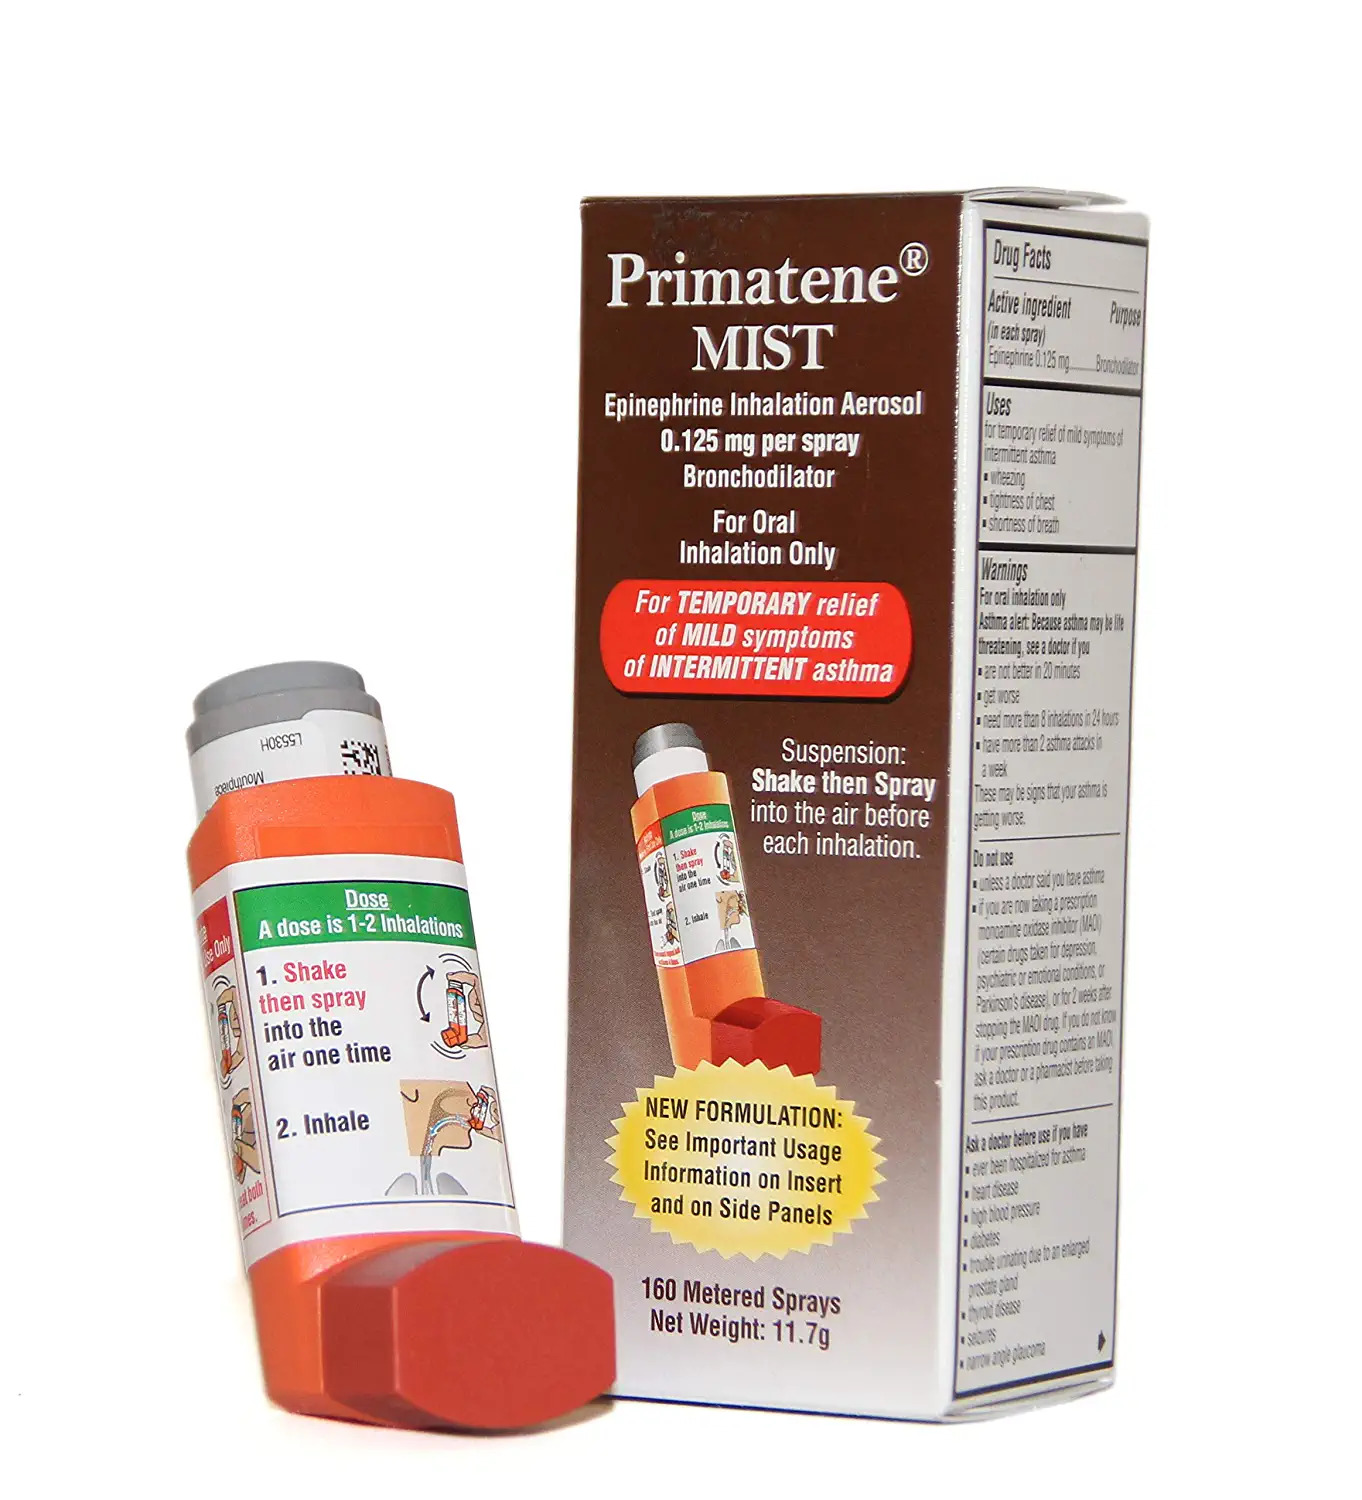 Primatene Mist Epinephrine Inhalation Aerosol - 11.7g Asthama Relief